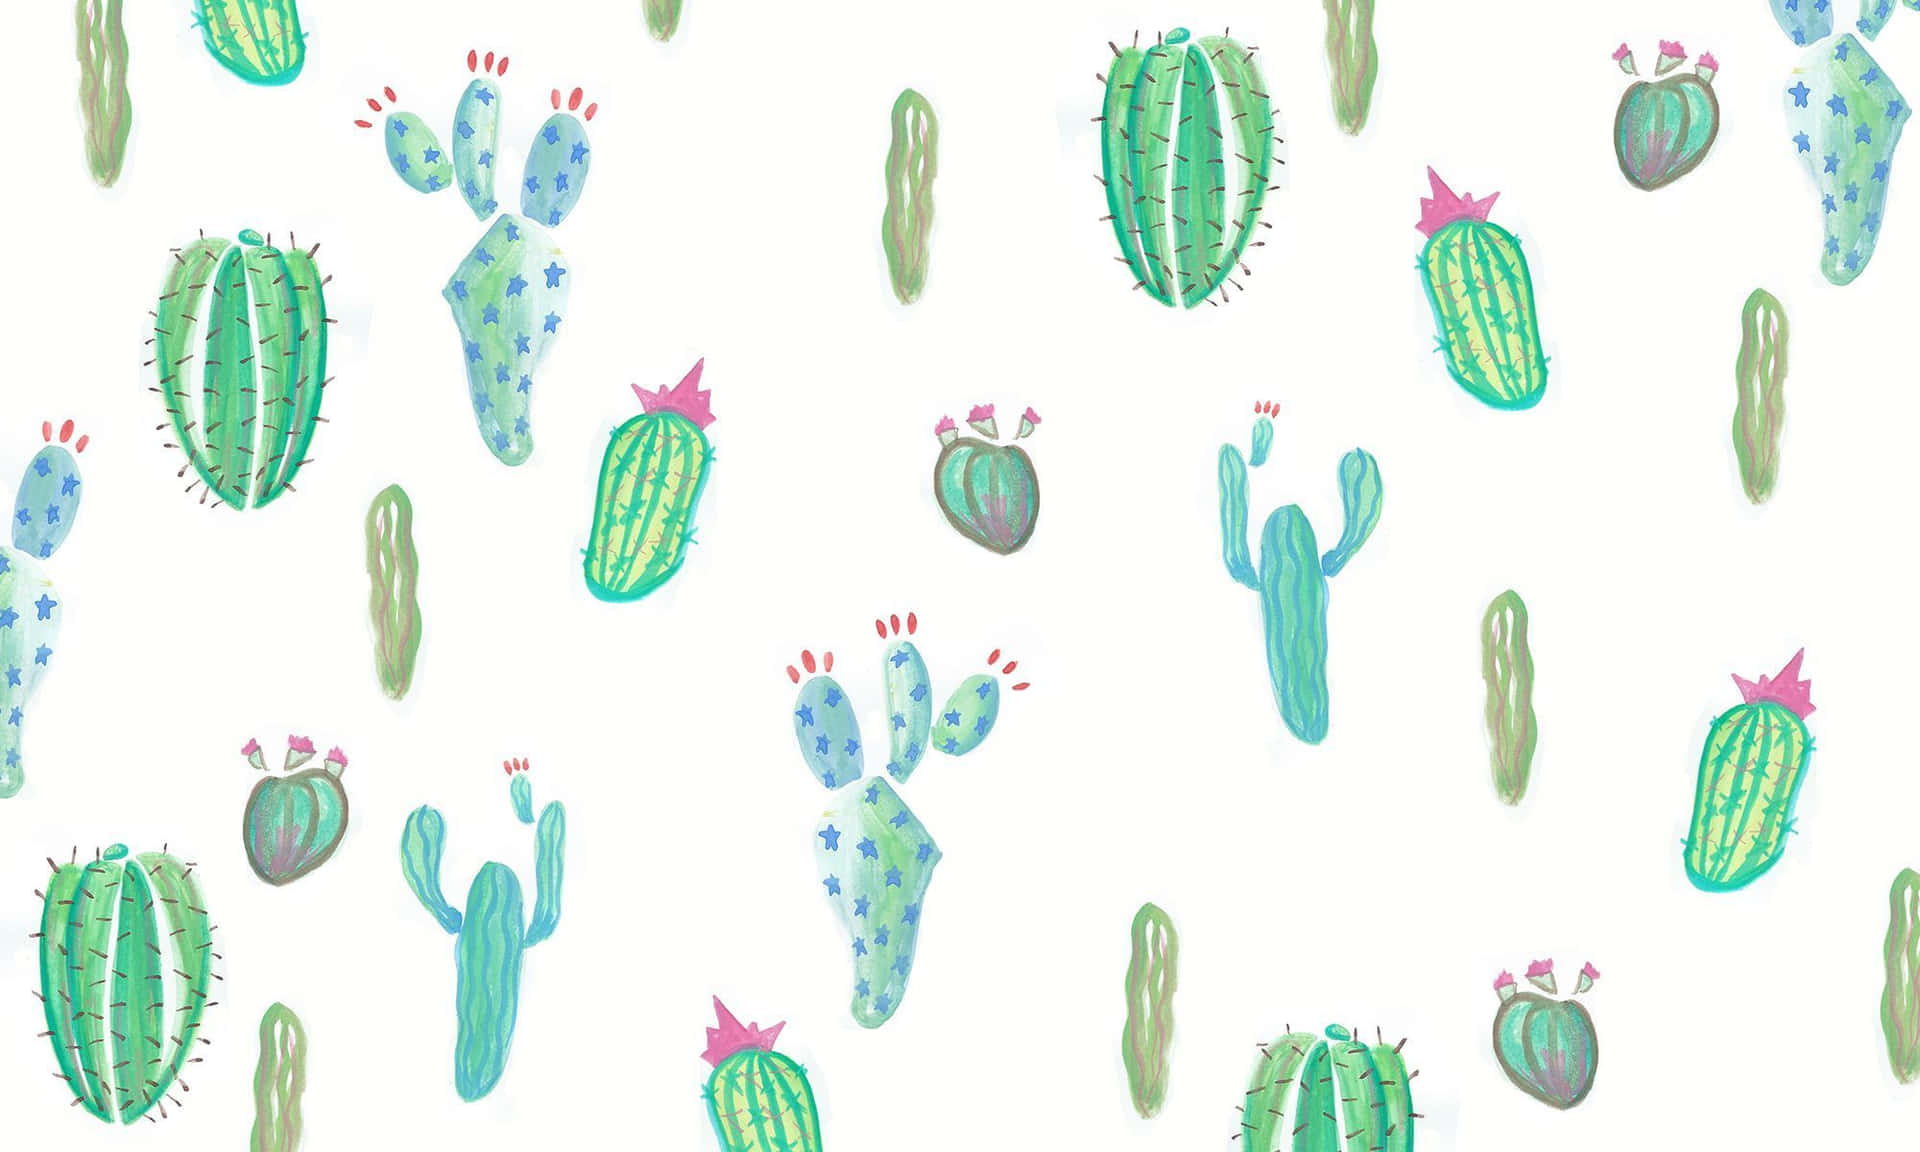 Caption: Cute Kawaii Cactus Brings Joy to Your Day Wallpaper